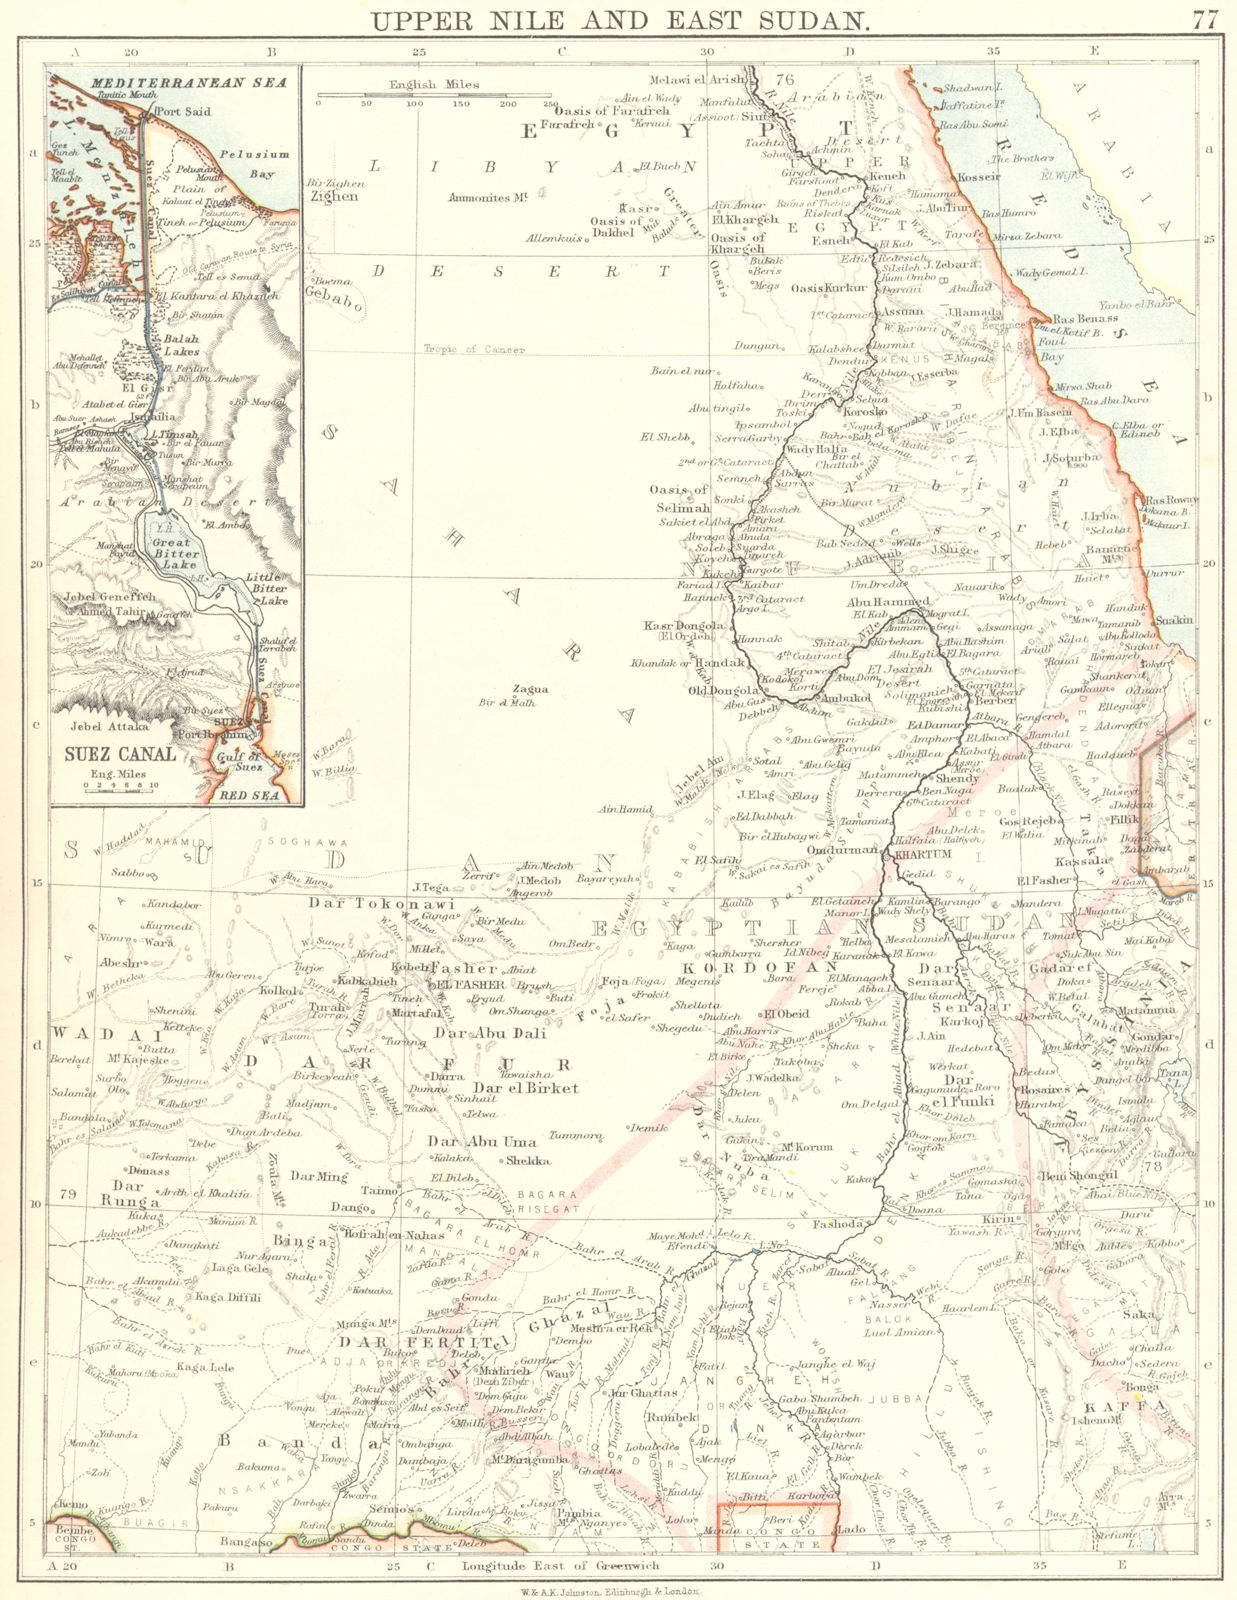 UPPER NILE, EAST SUDAN & SUEZ CANAL. Khartoum.White/Blue Nile.JOHNSTON 1899 map